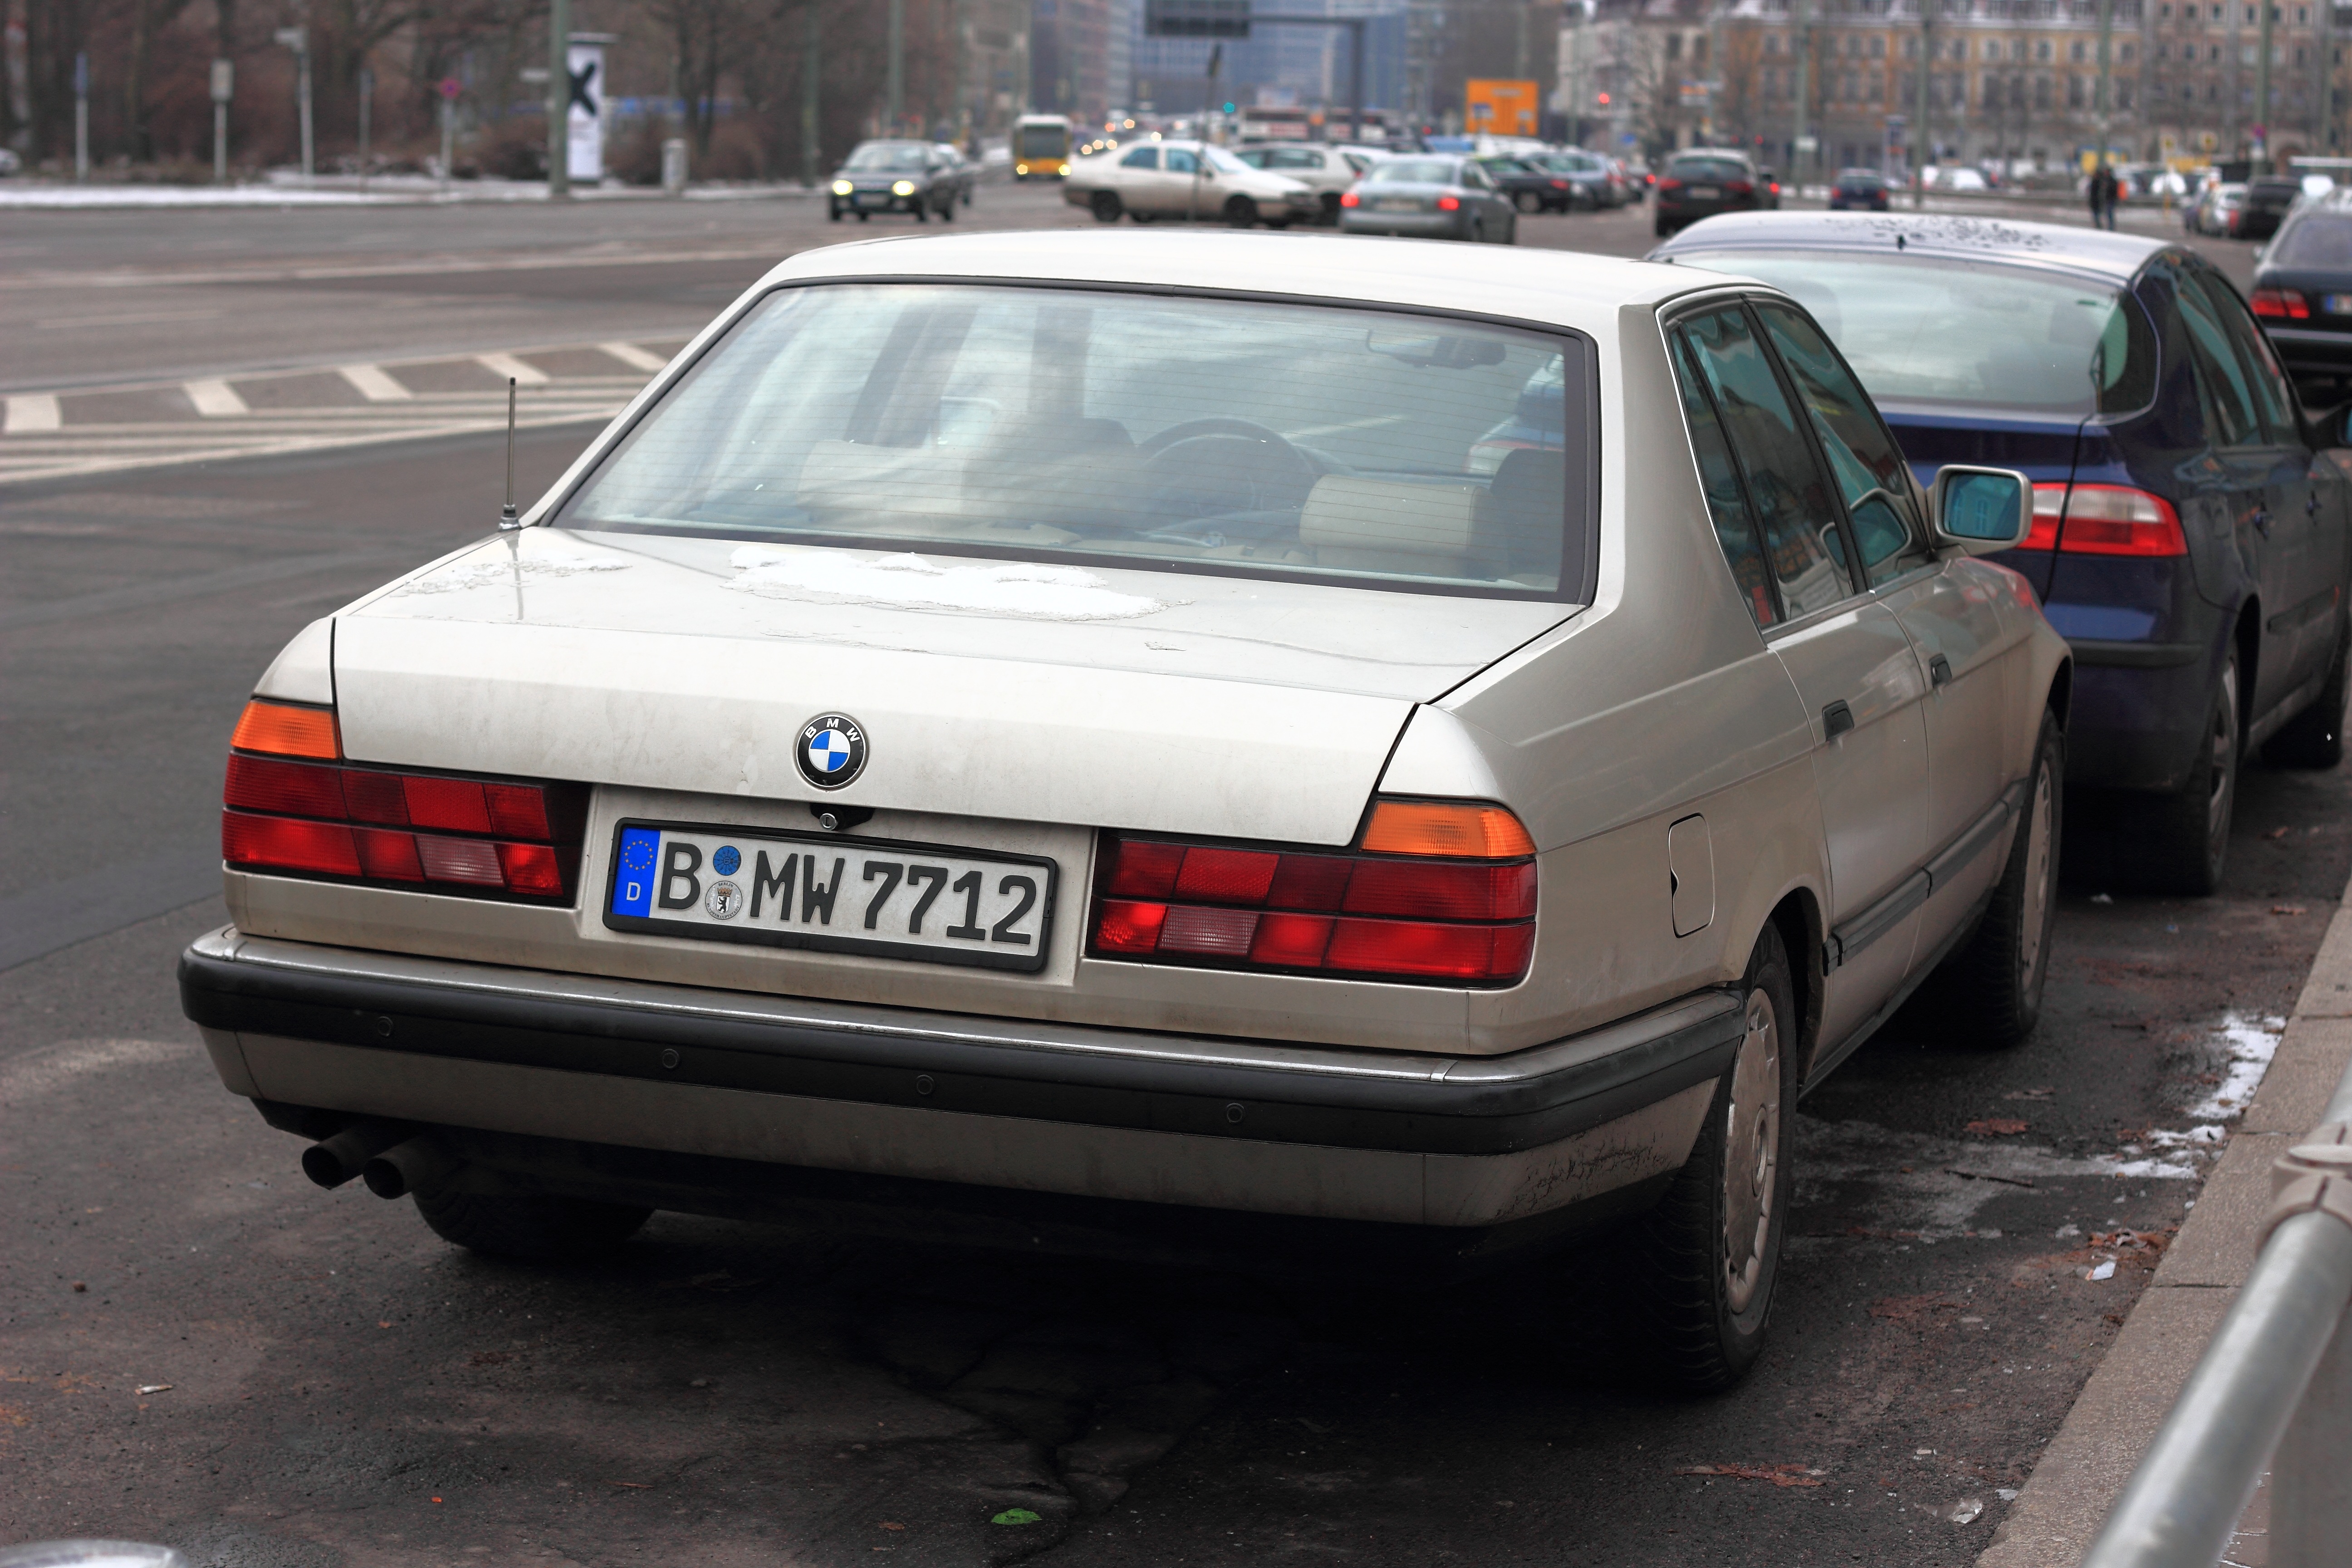 BMW 730i | Flickr - Photo Sharing!